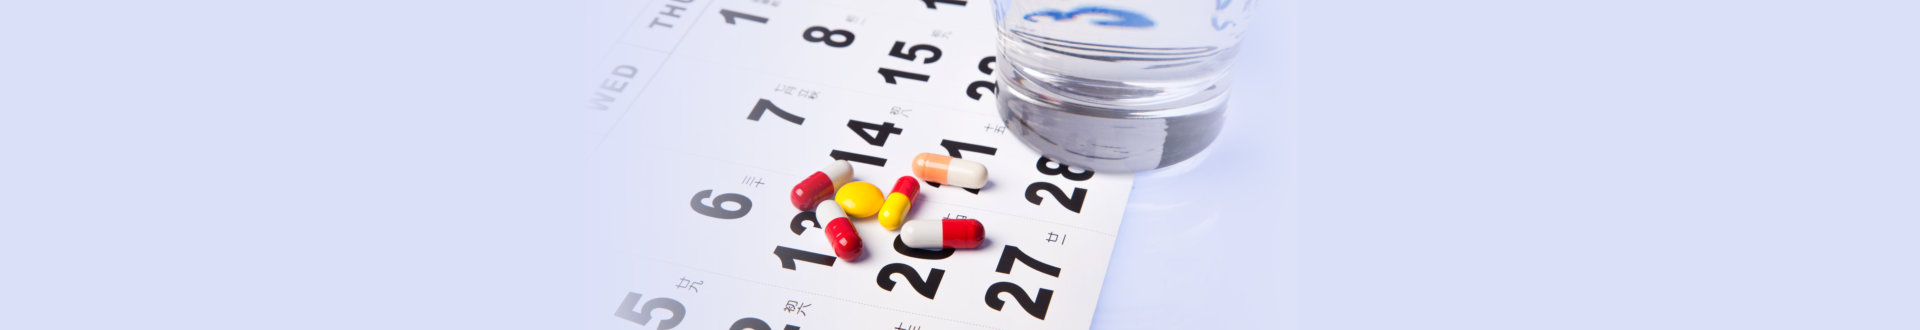 calendar with medicines